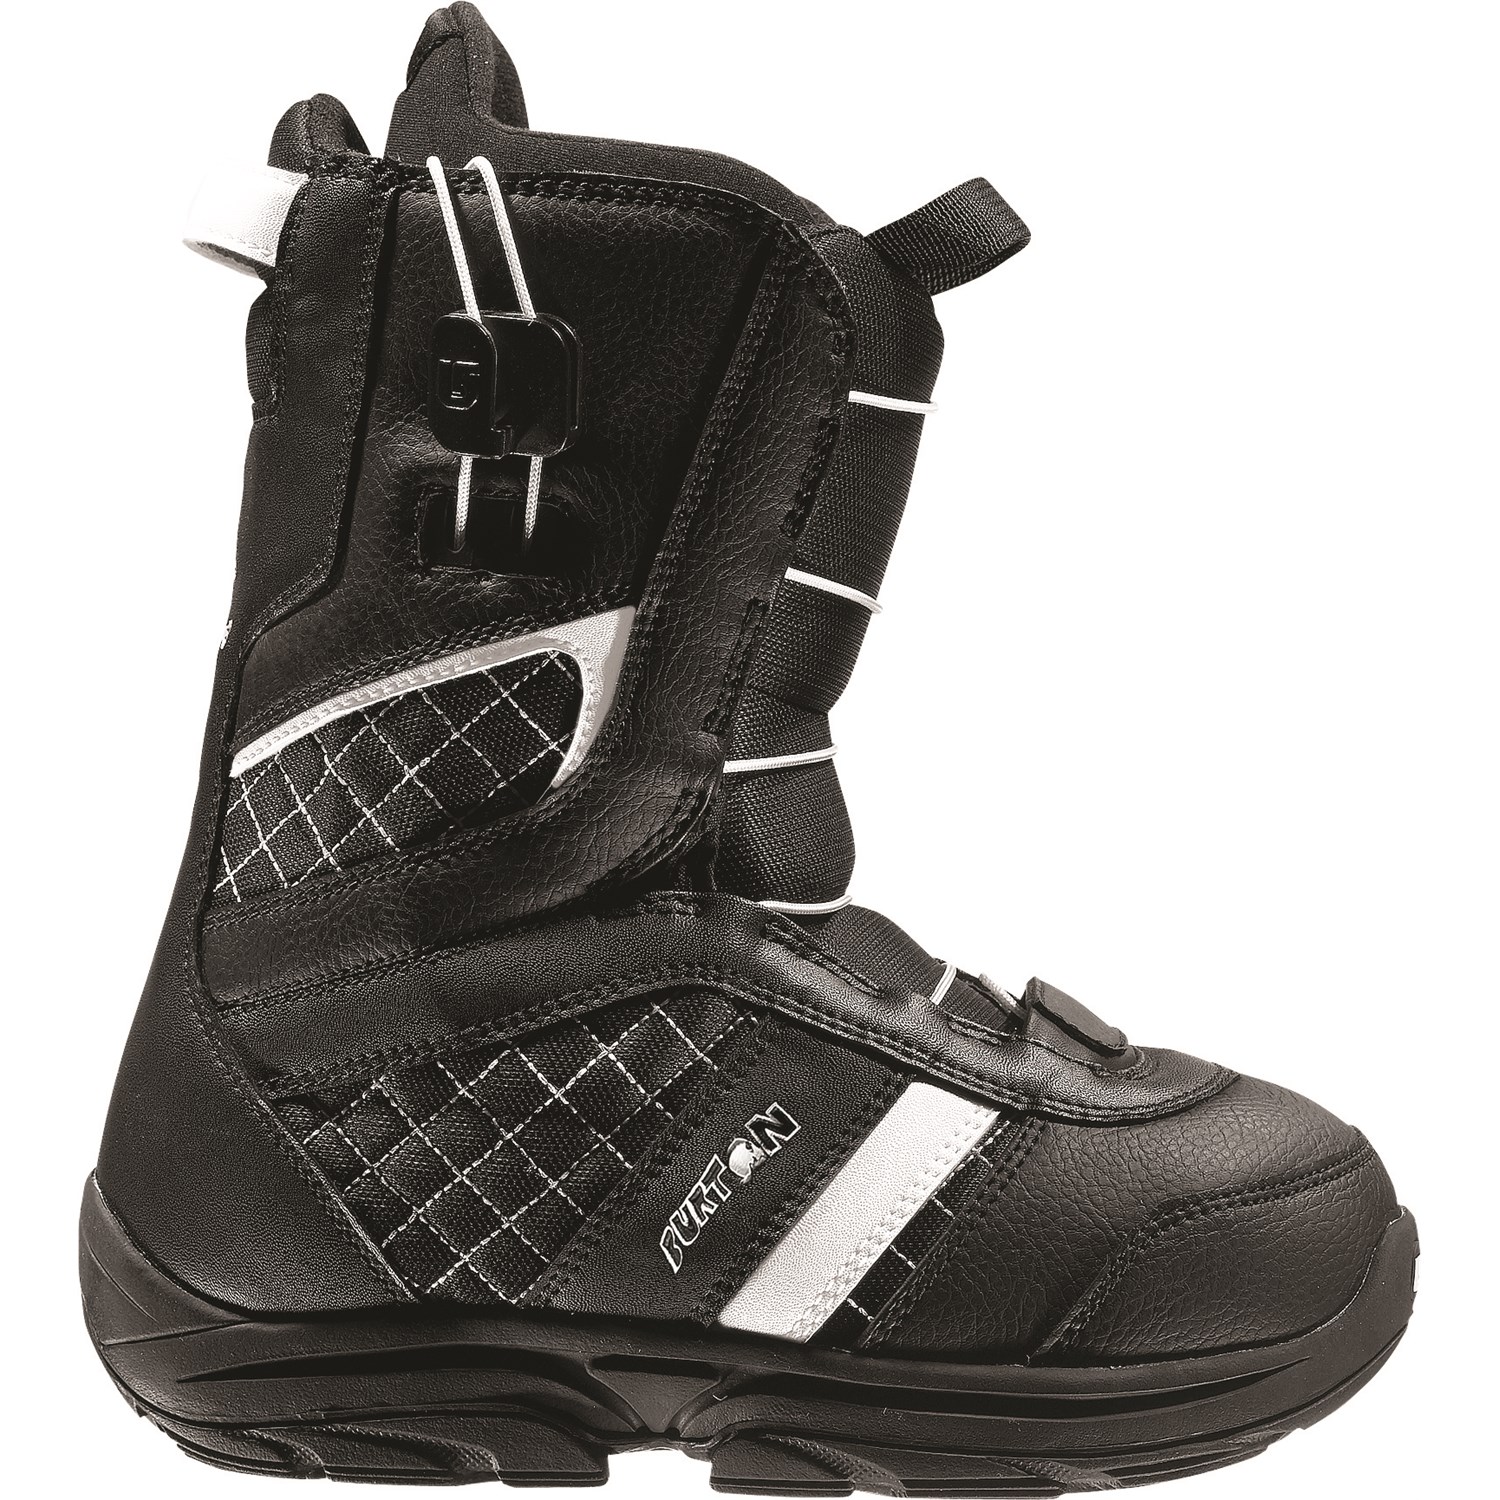 Infecteren Cokes constant Burton Ruler Smalls Snowboard Boots - Youth 2010 | evo